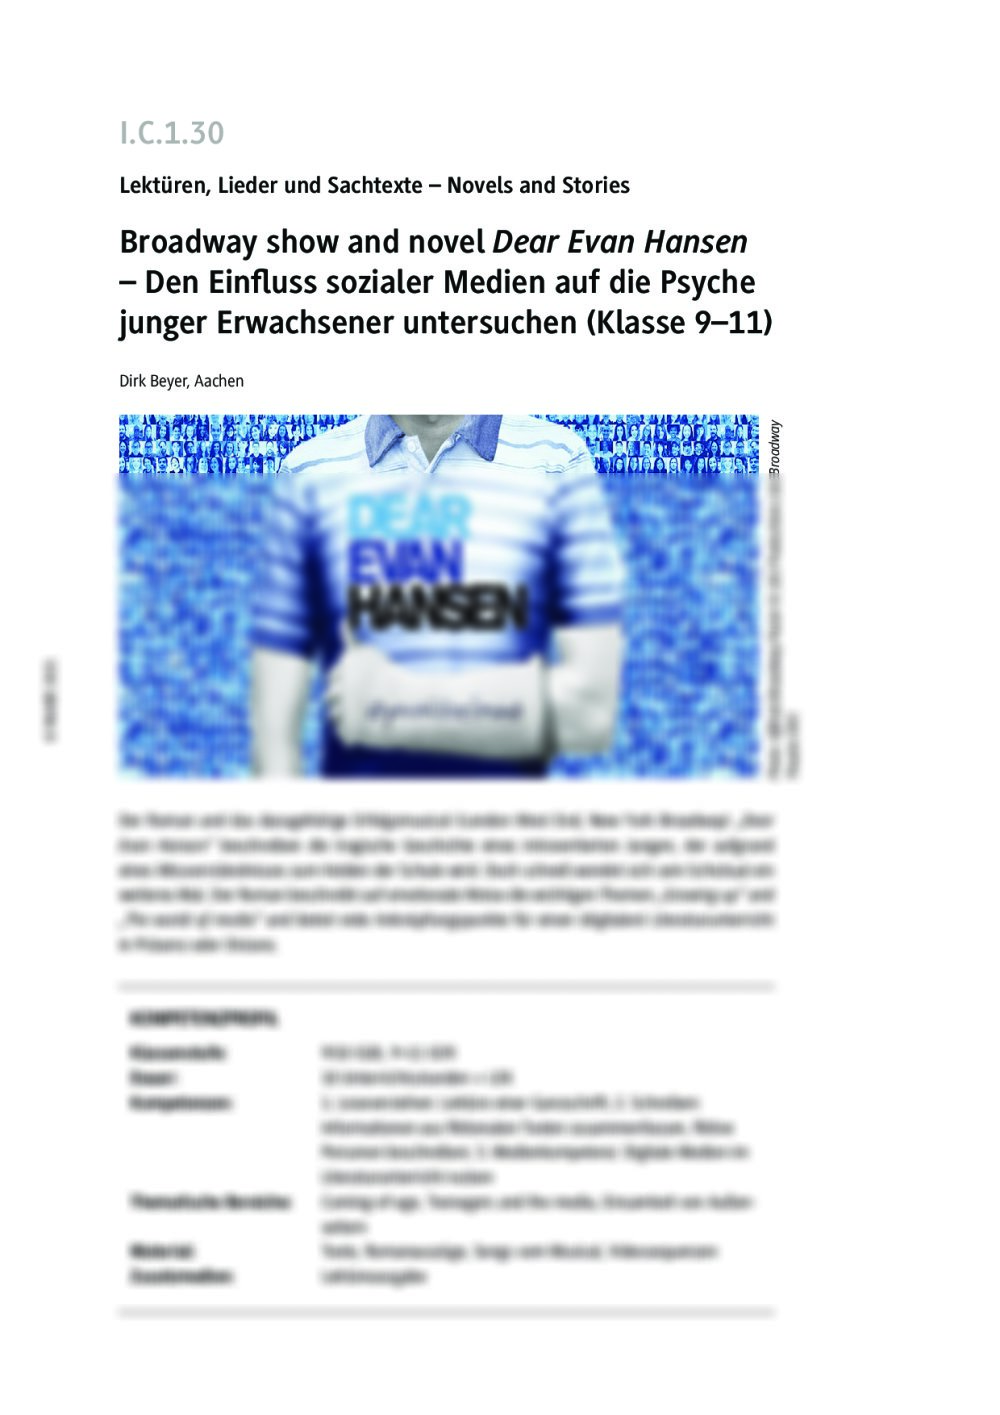 Broadway show and novel "Dear Evan Hansen" - Seite 1